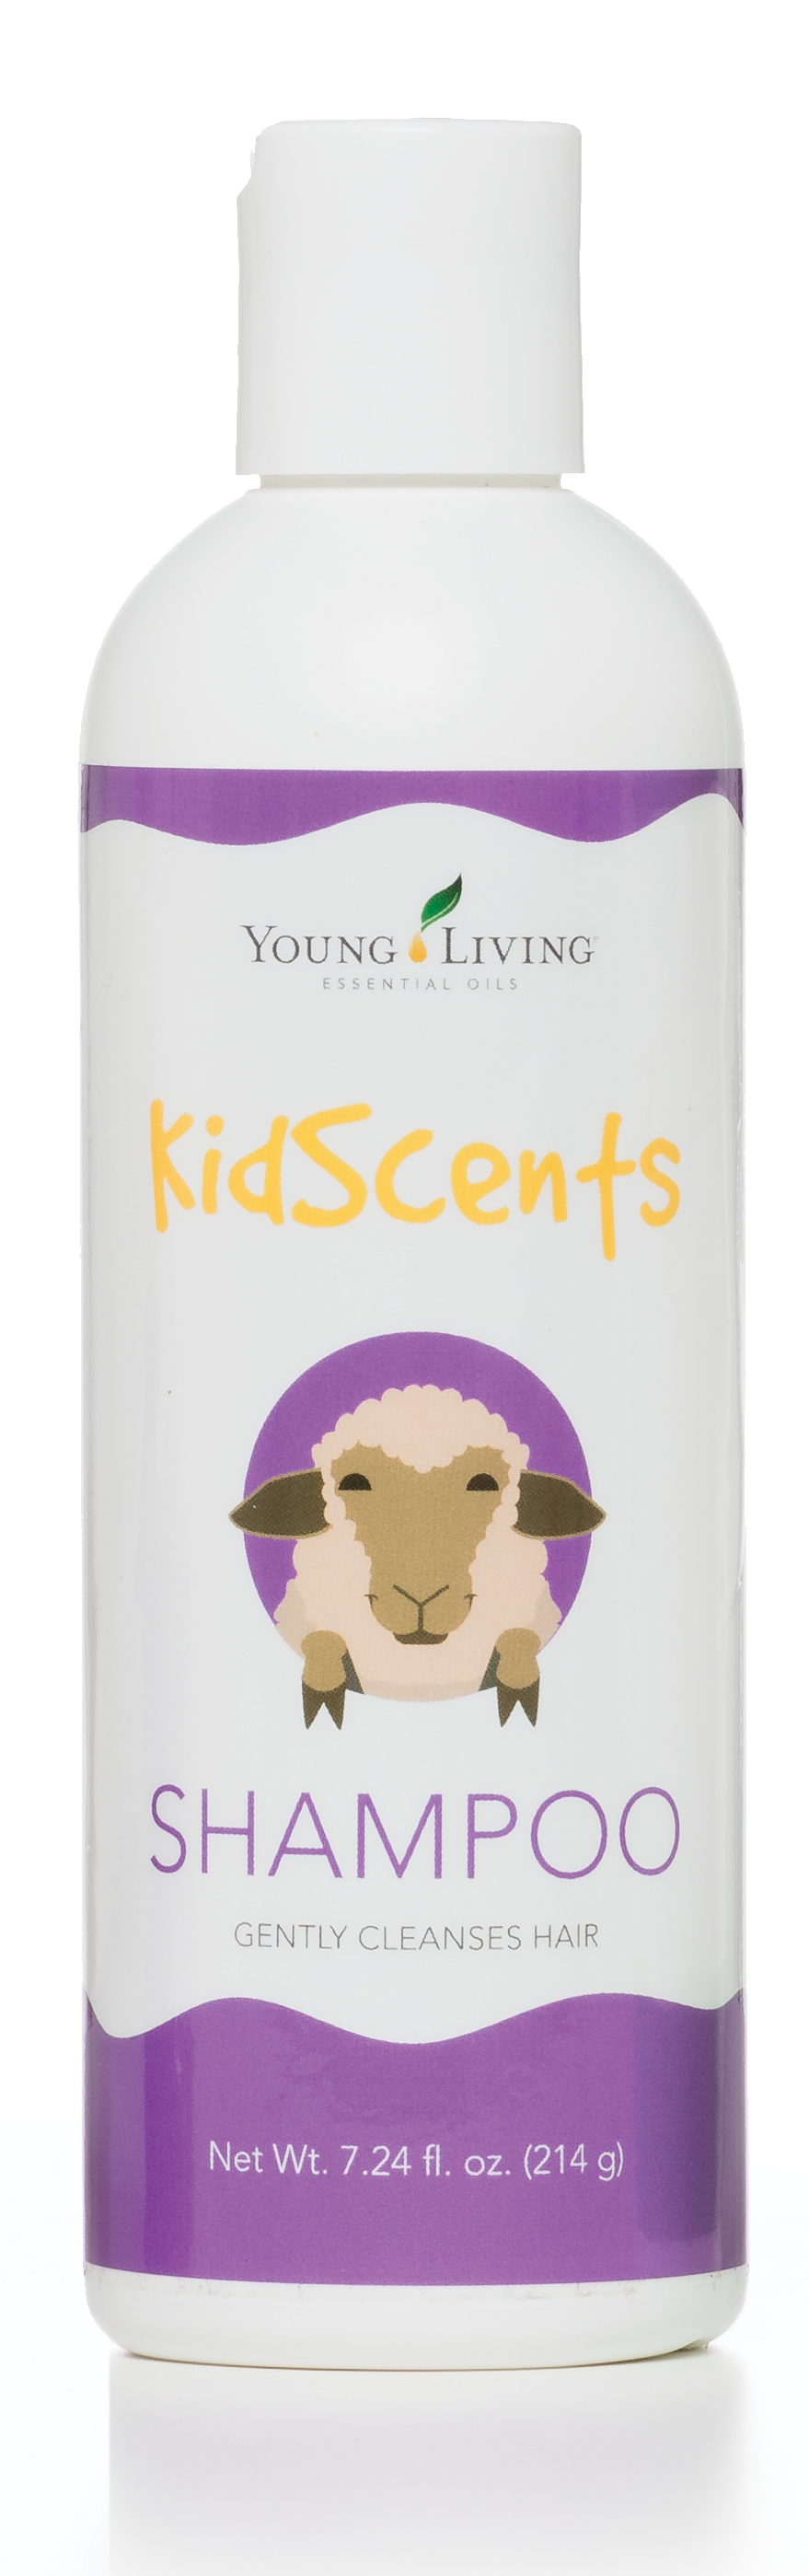 KidScents Shampoo Silo.png